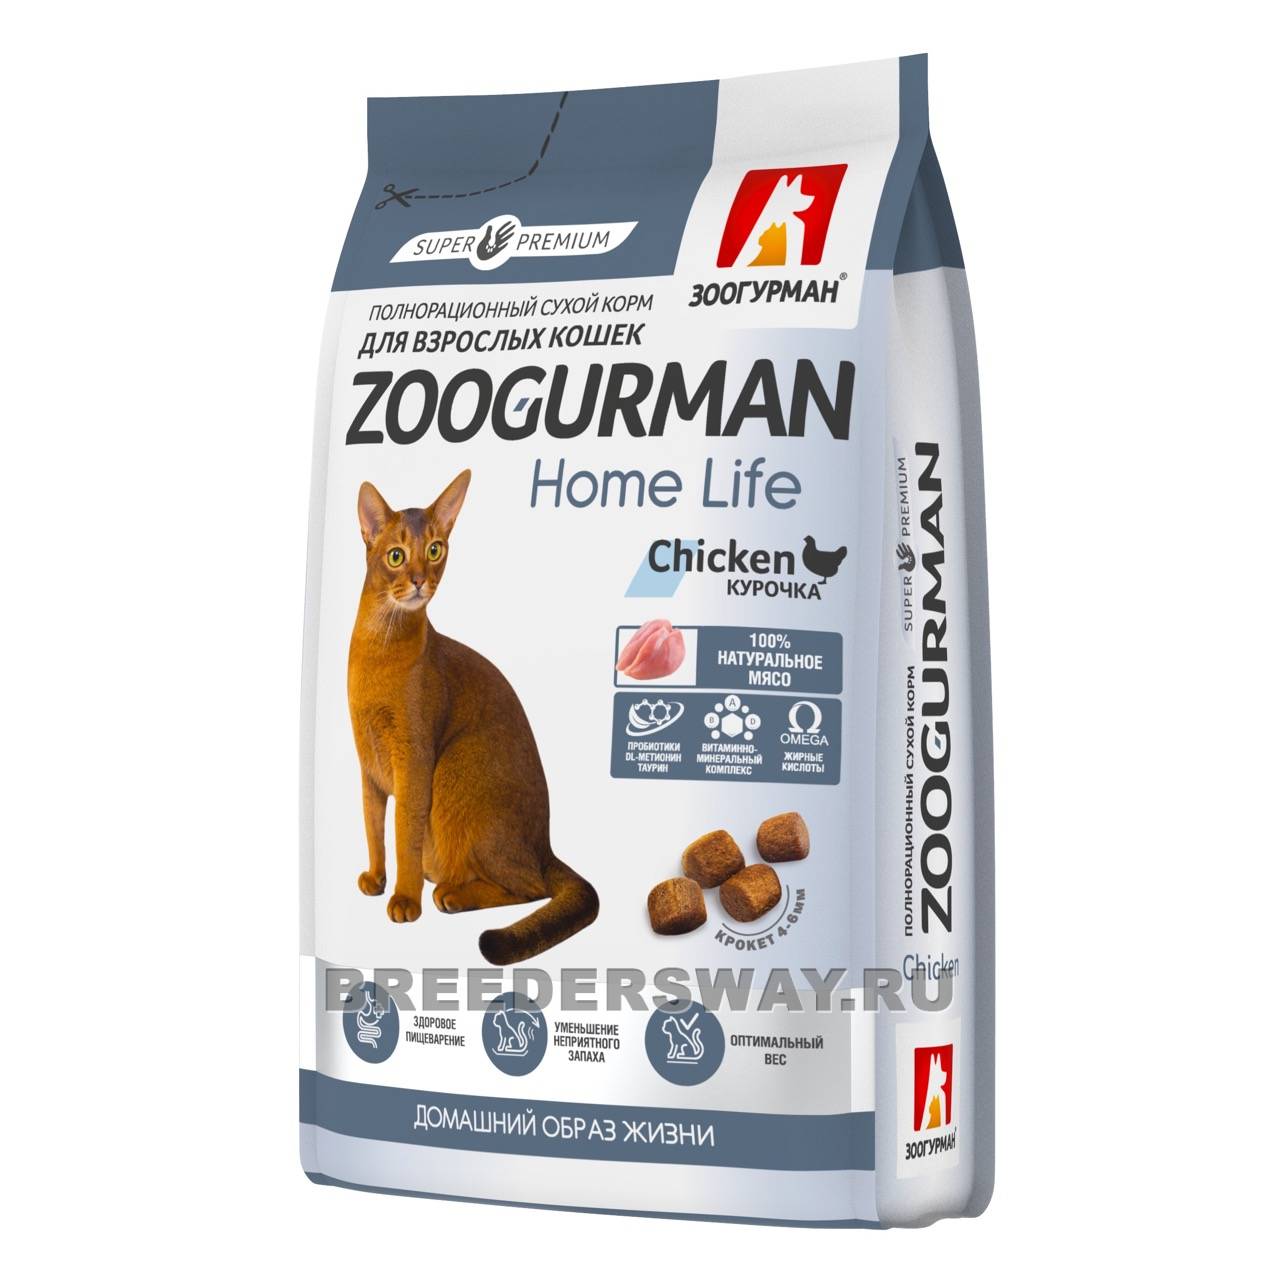 350гр Zoogurman Home Life для кошек супер-премиум Курочка 28/12 6мм